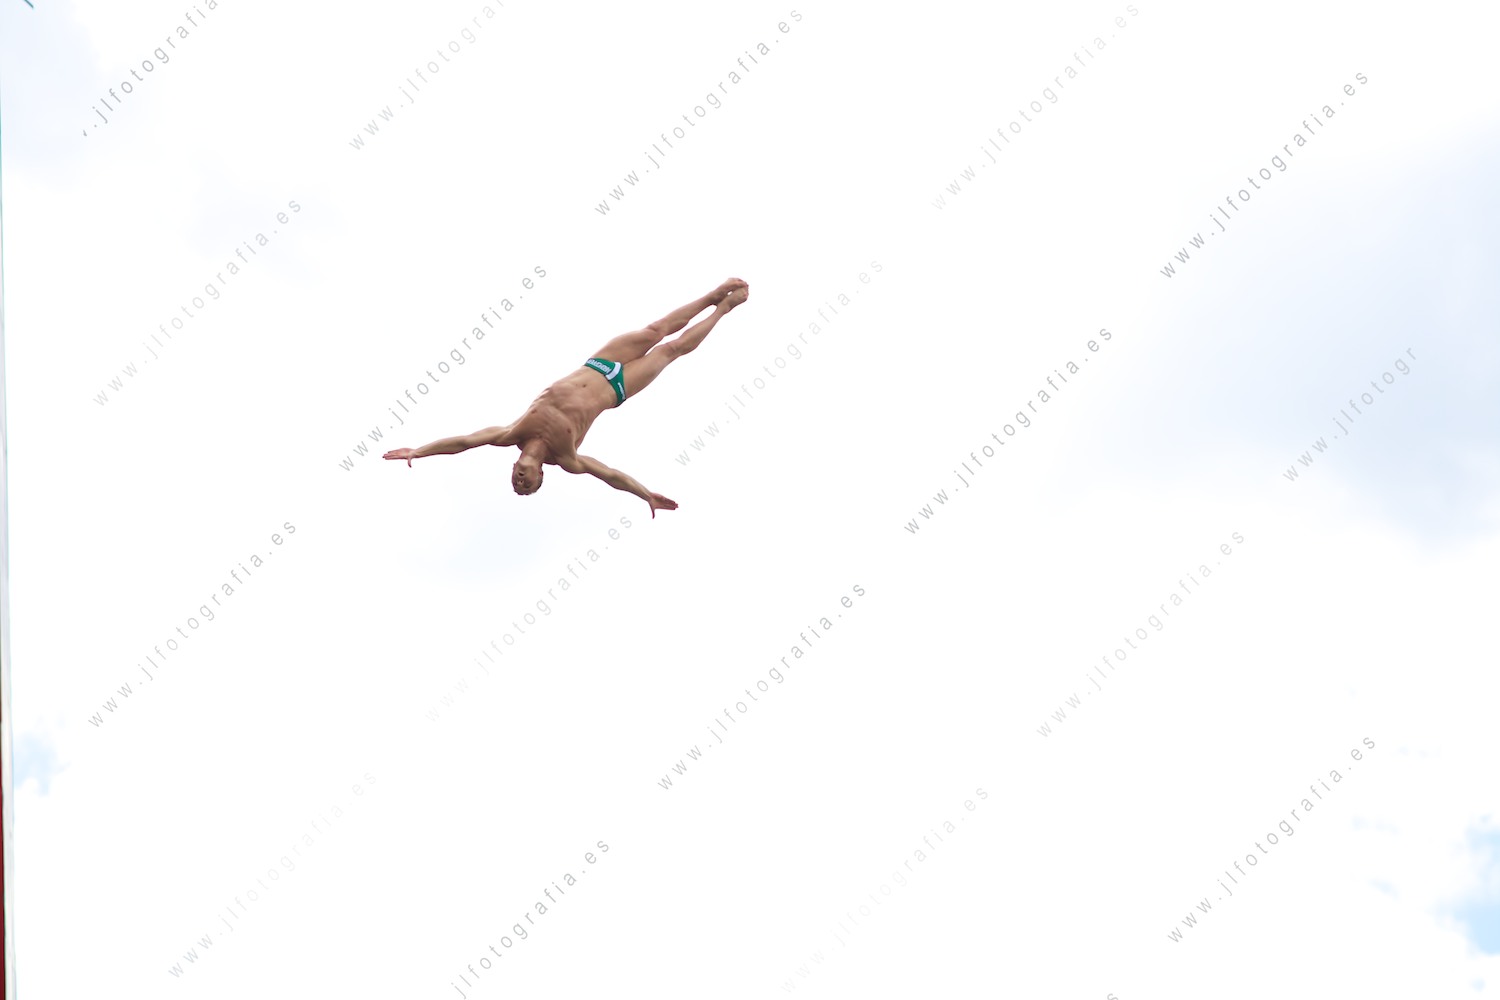 saltador Cliff Diving de Red Bull en el cielo de Bilbao